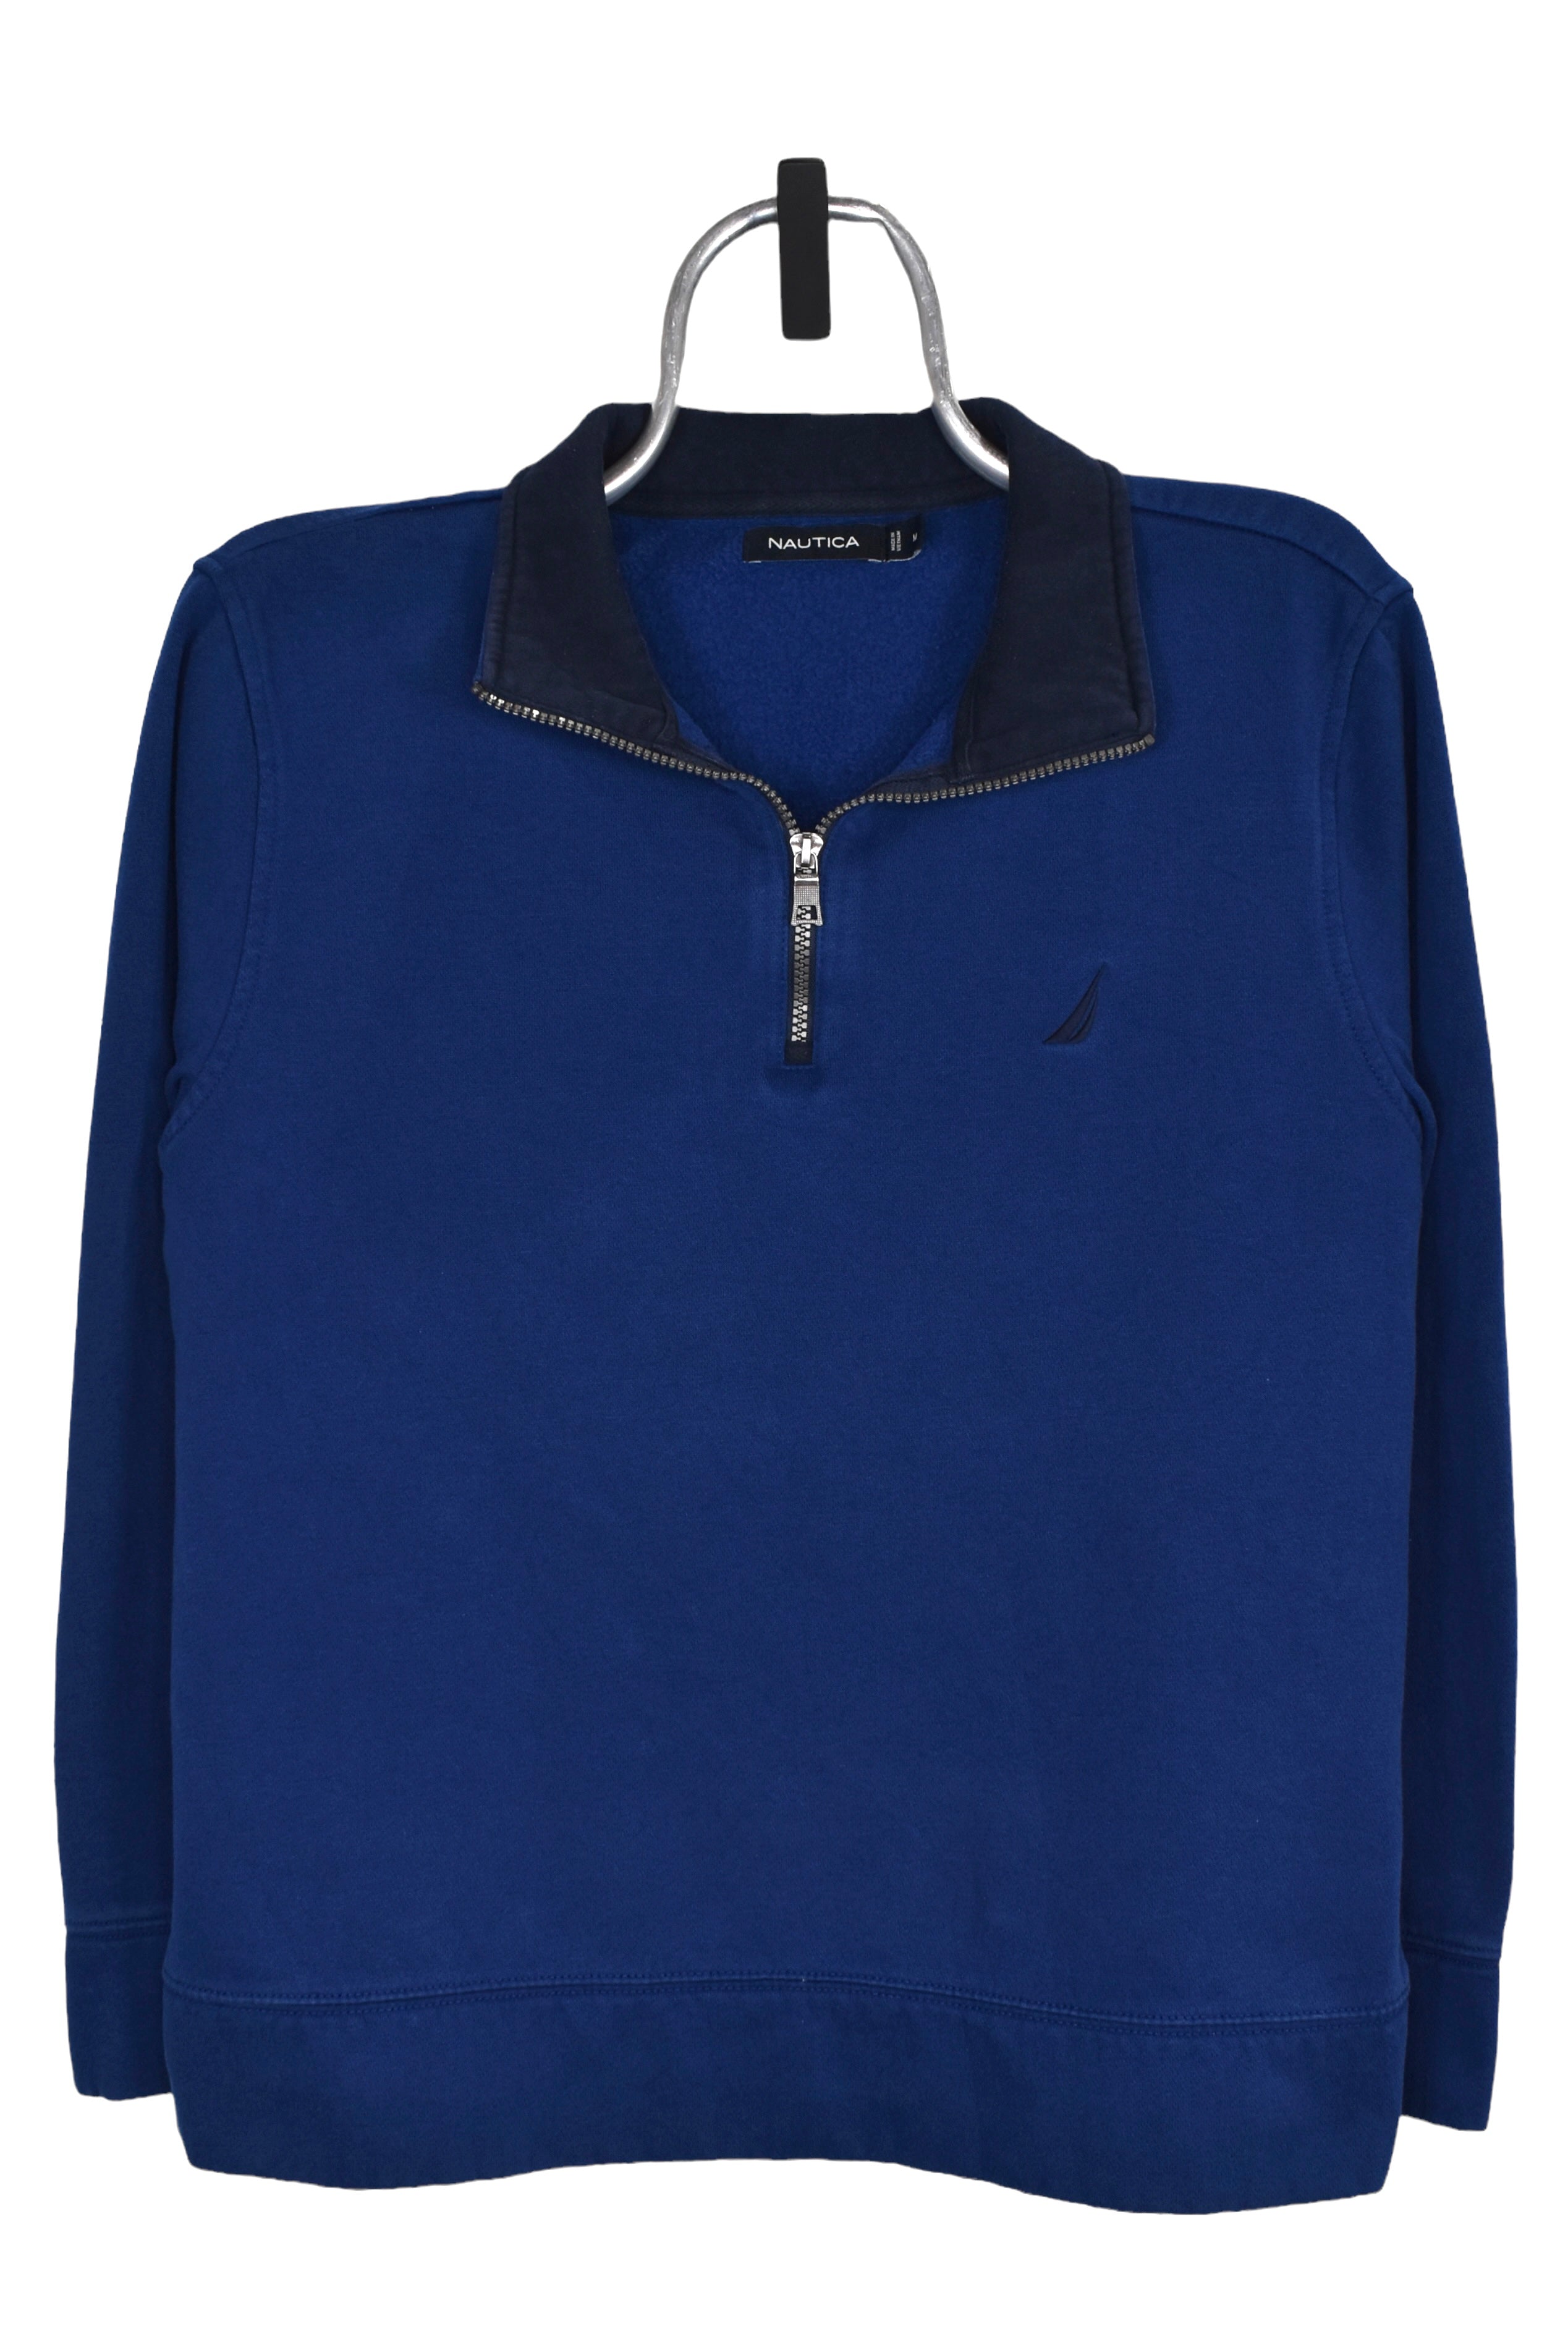 Vintage Nautica 1/4 zip (M), navy embroidered sweatshirt